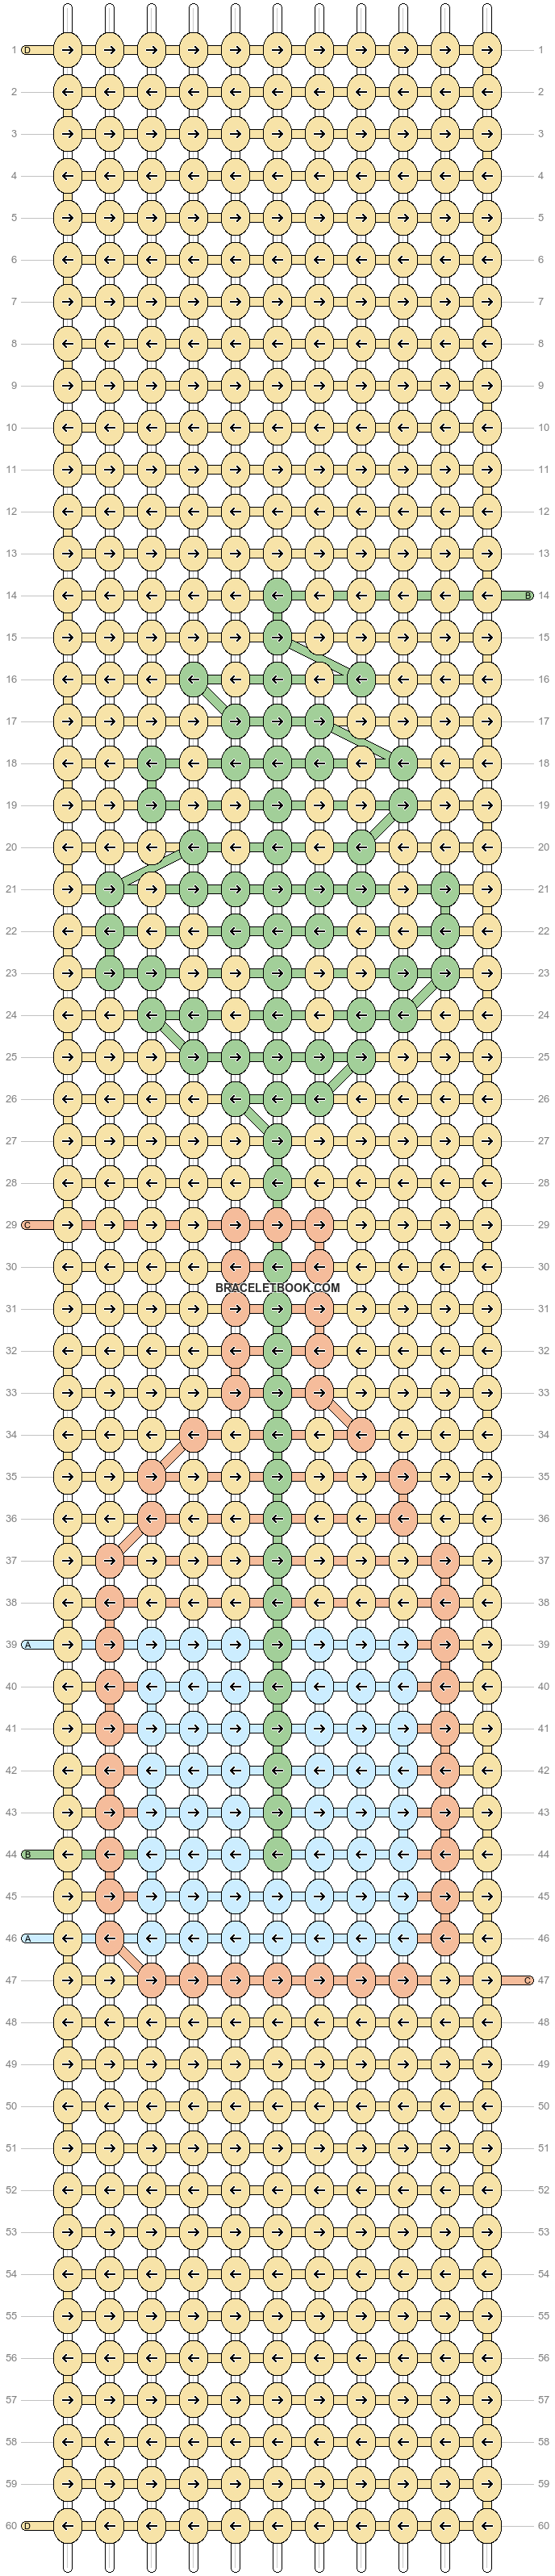 Alpha pattern #38260 variation #42909 pattern